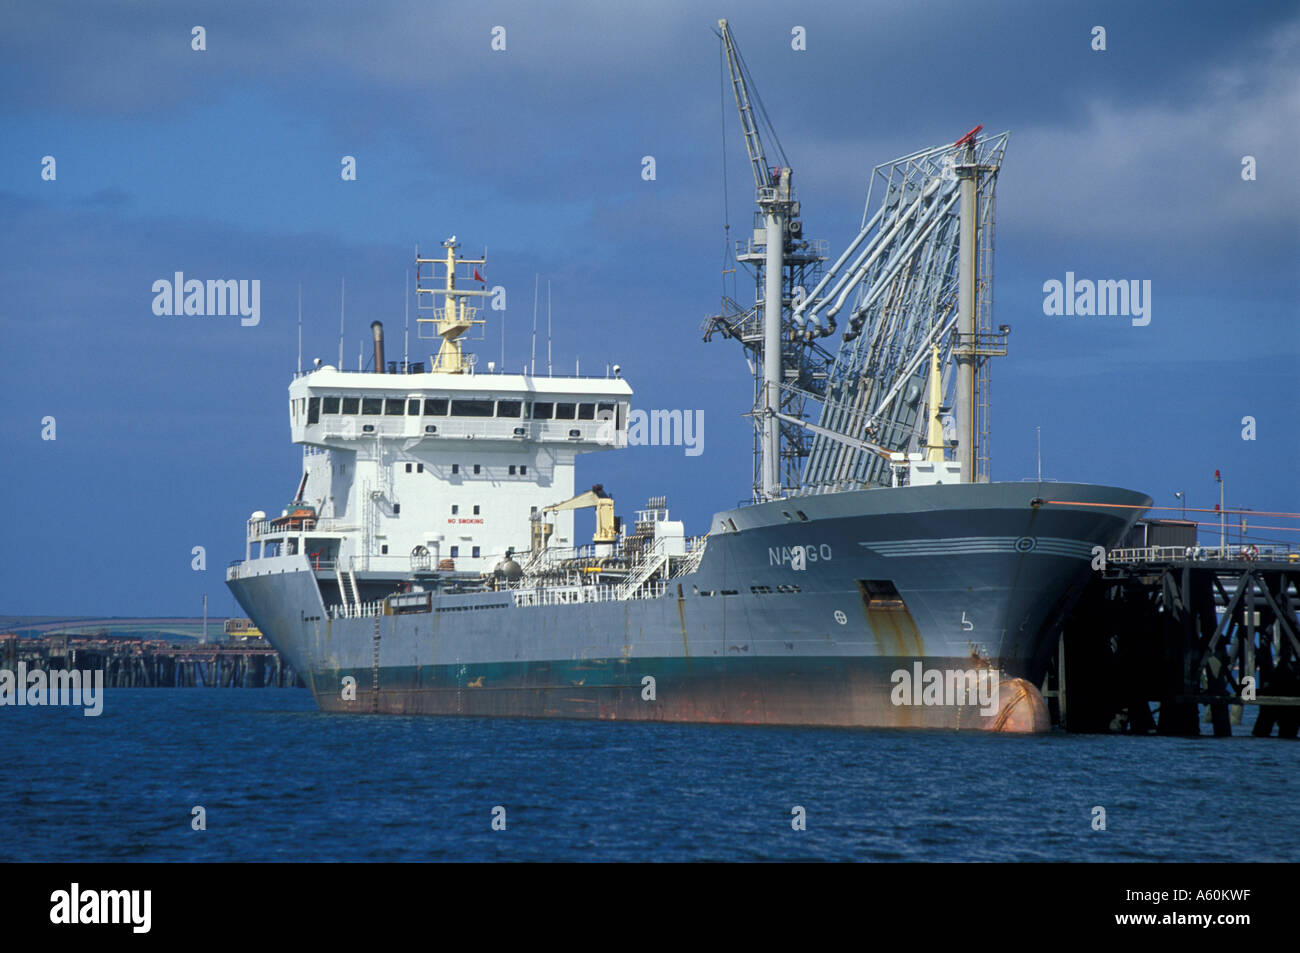 Navigo coastal oil tanker unloading at jetty, Milford Haven, Wales, UK Stock Photo